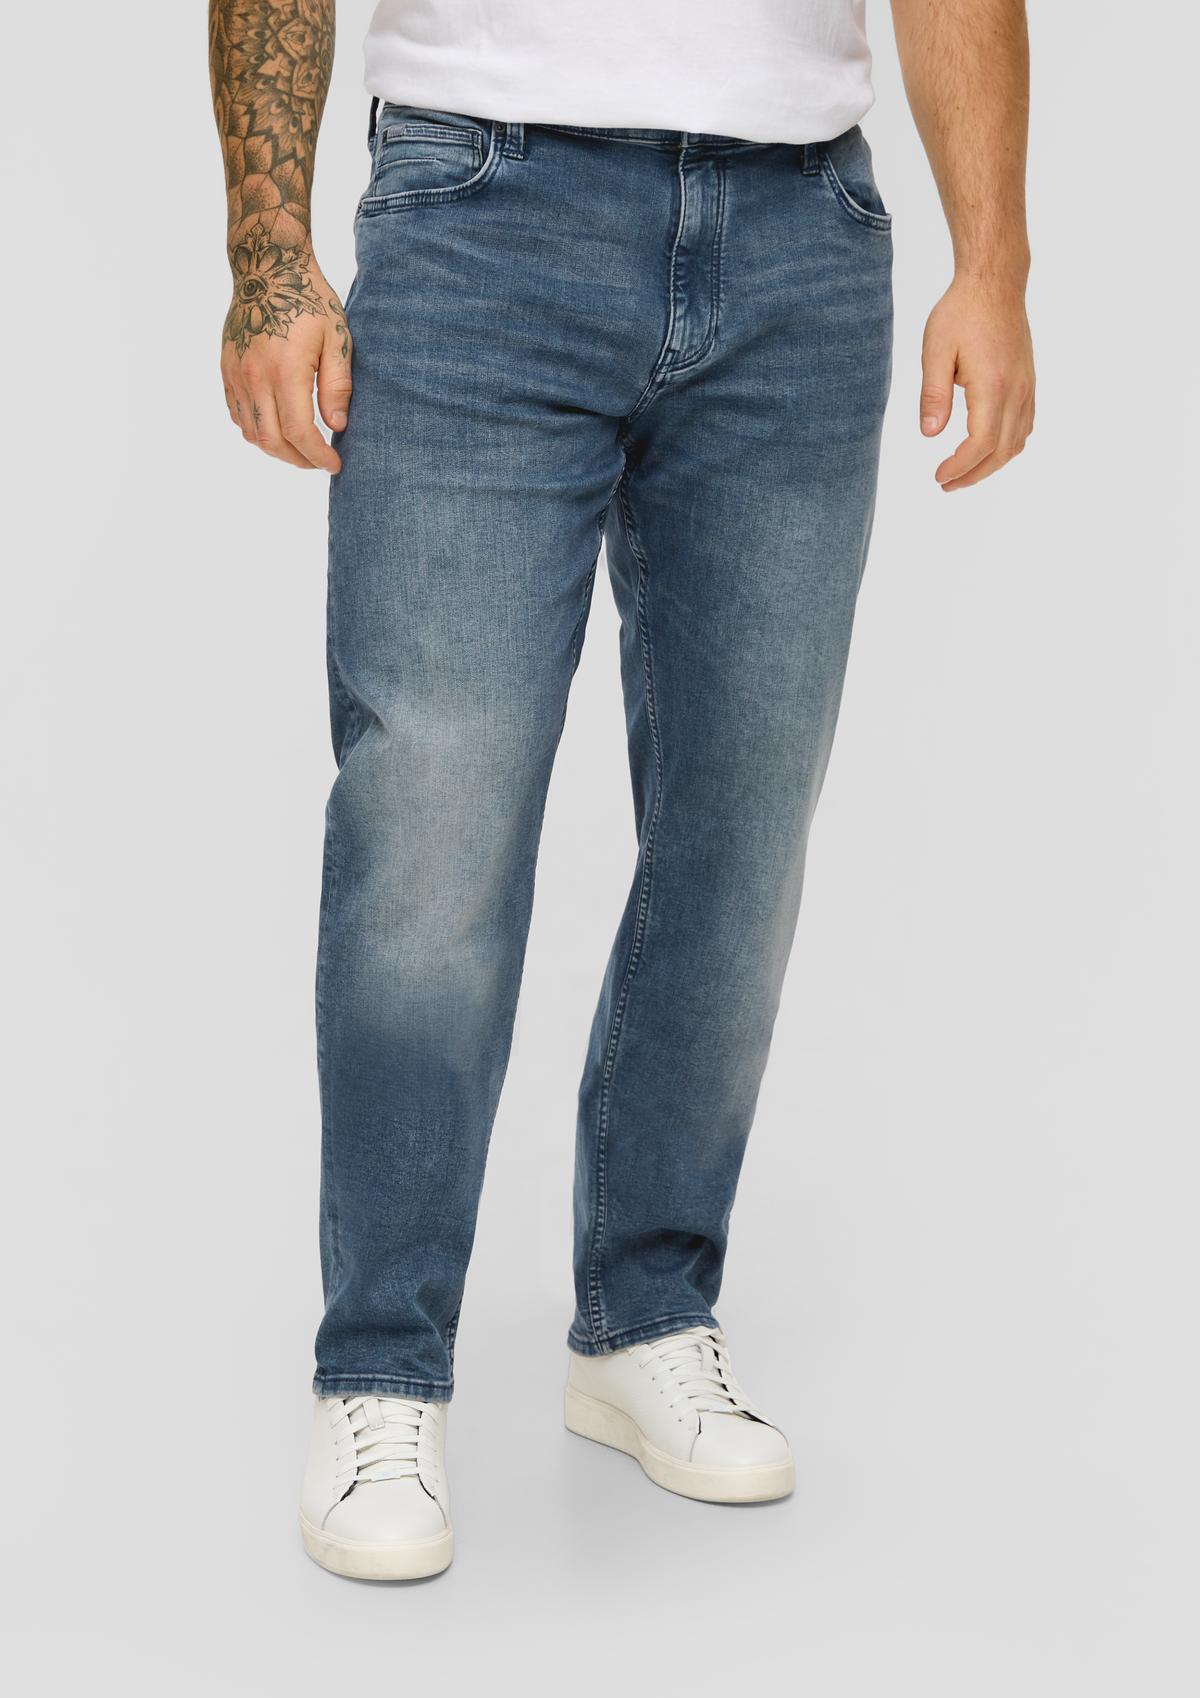 / / mid jeans regular York regular - fit blue / leg rise